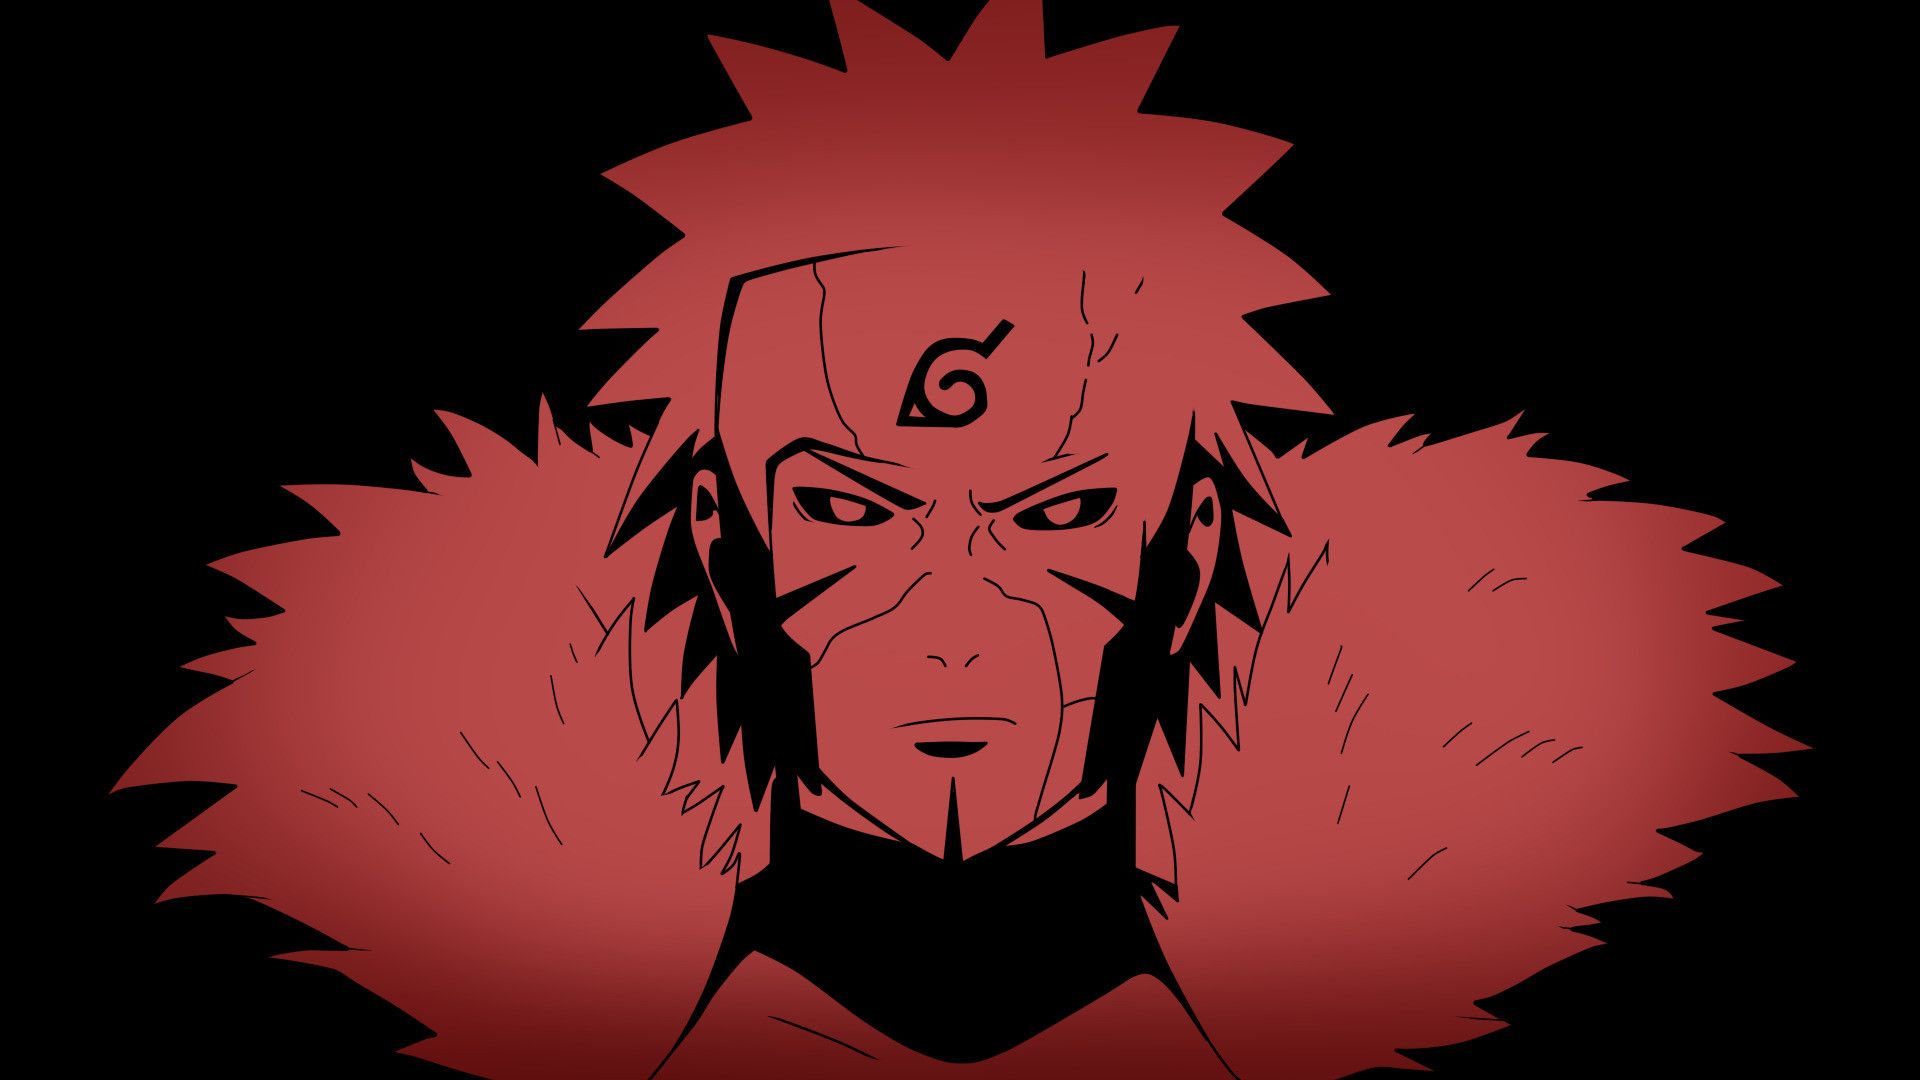 When Does Naruto Become Hokage? - TechNadu